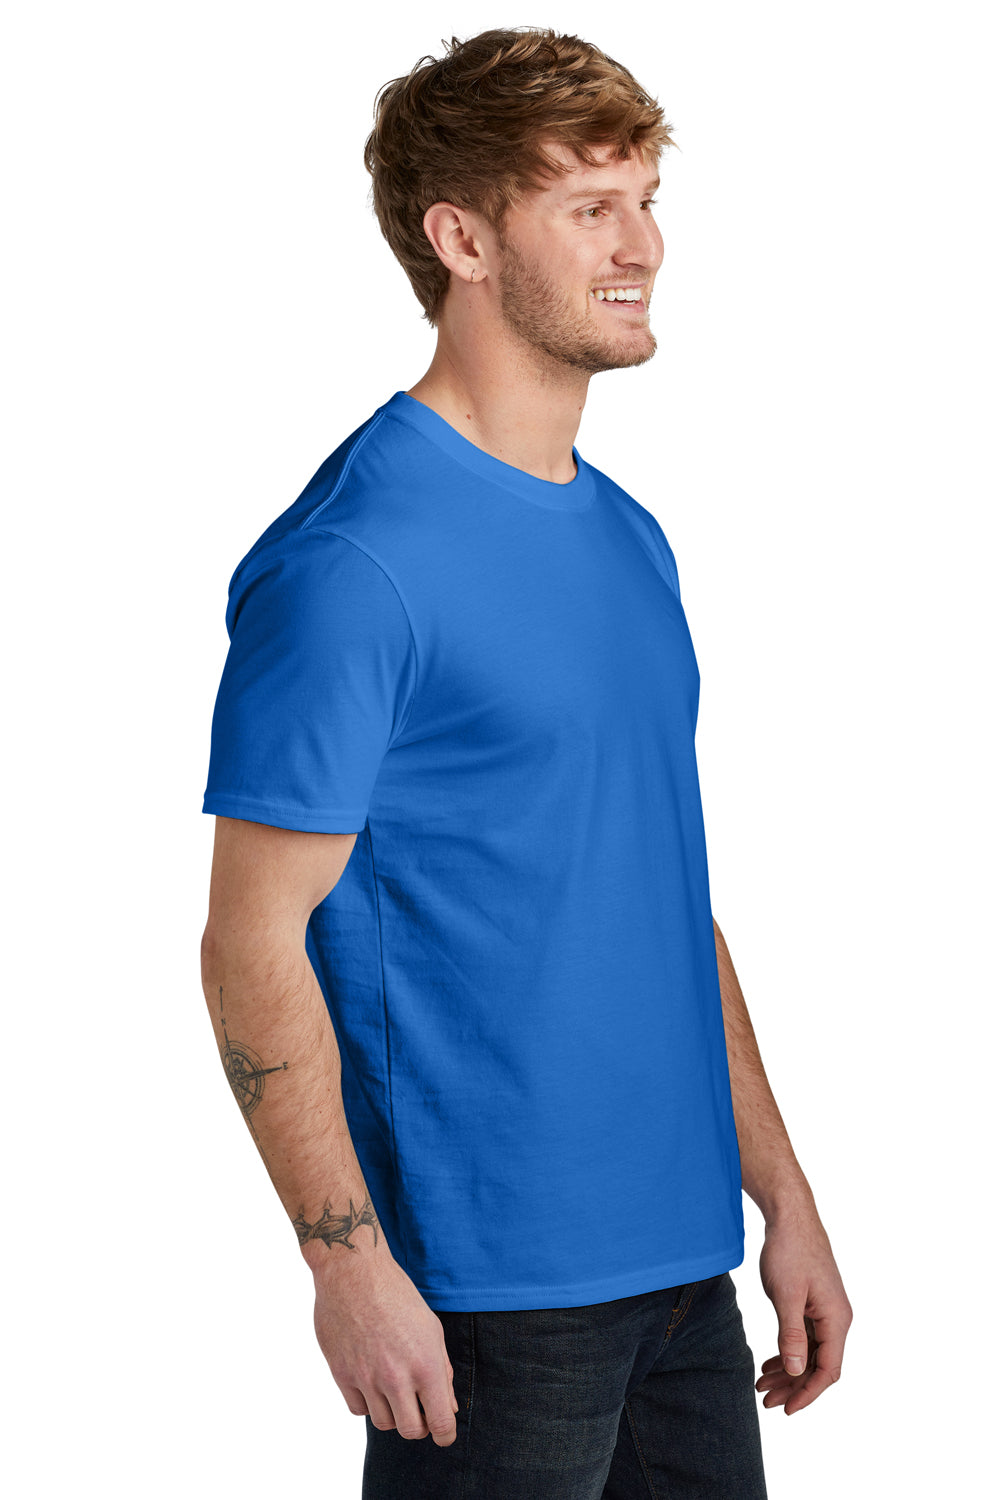 Volunteer Knitwear VL45 Daily Short Sleeve Crewneck T-Shirt True Royal Blue Side